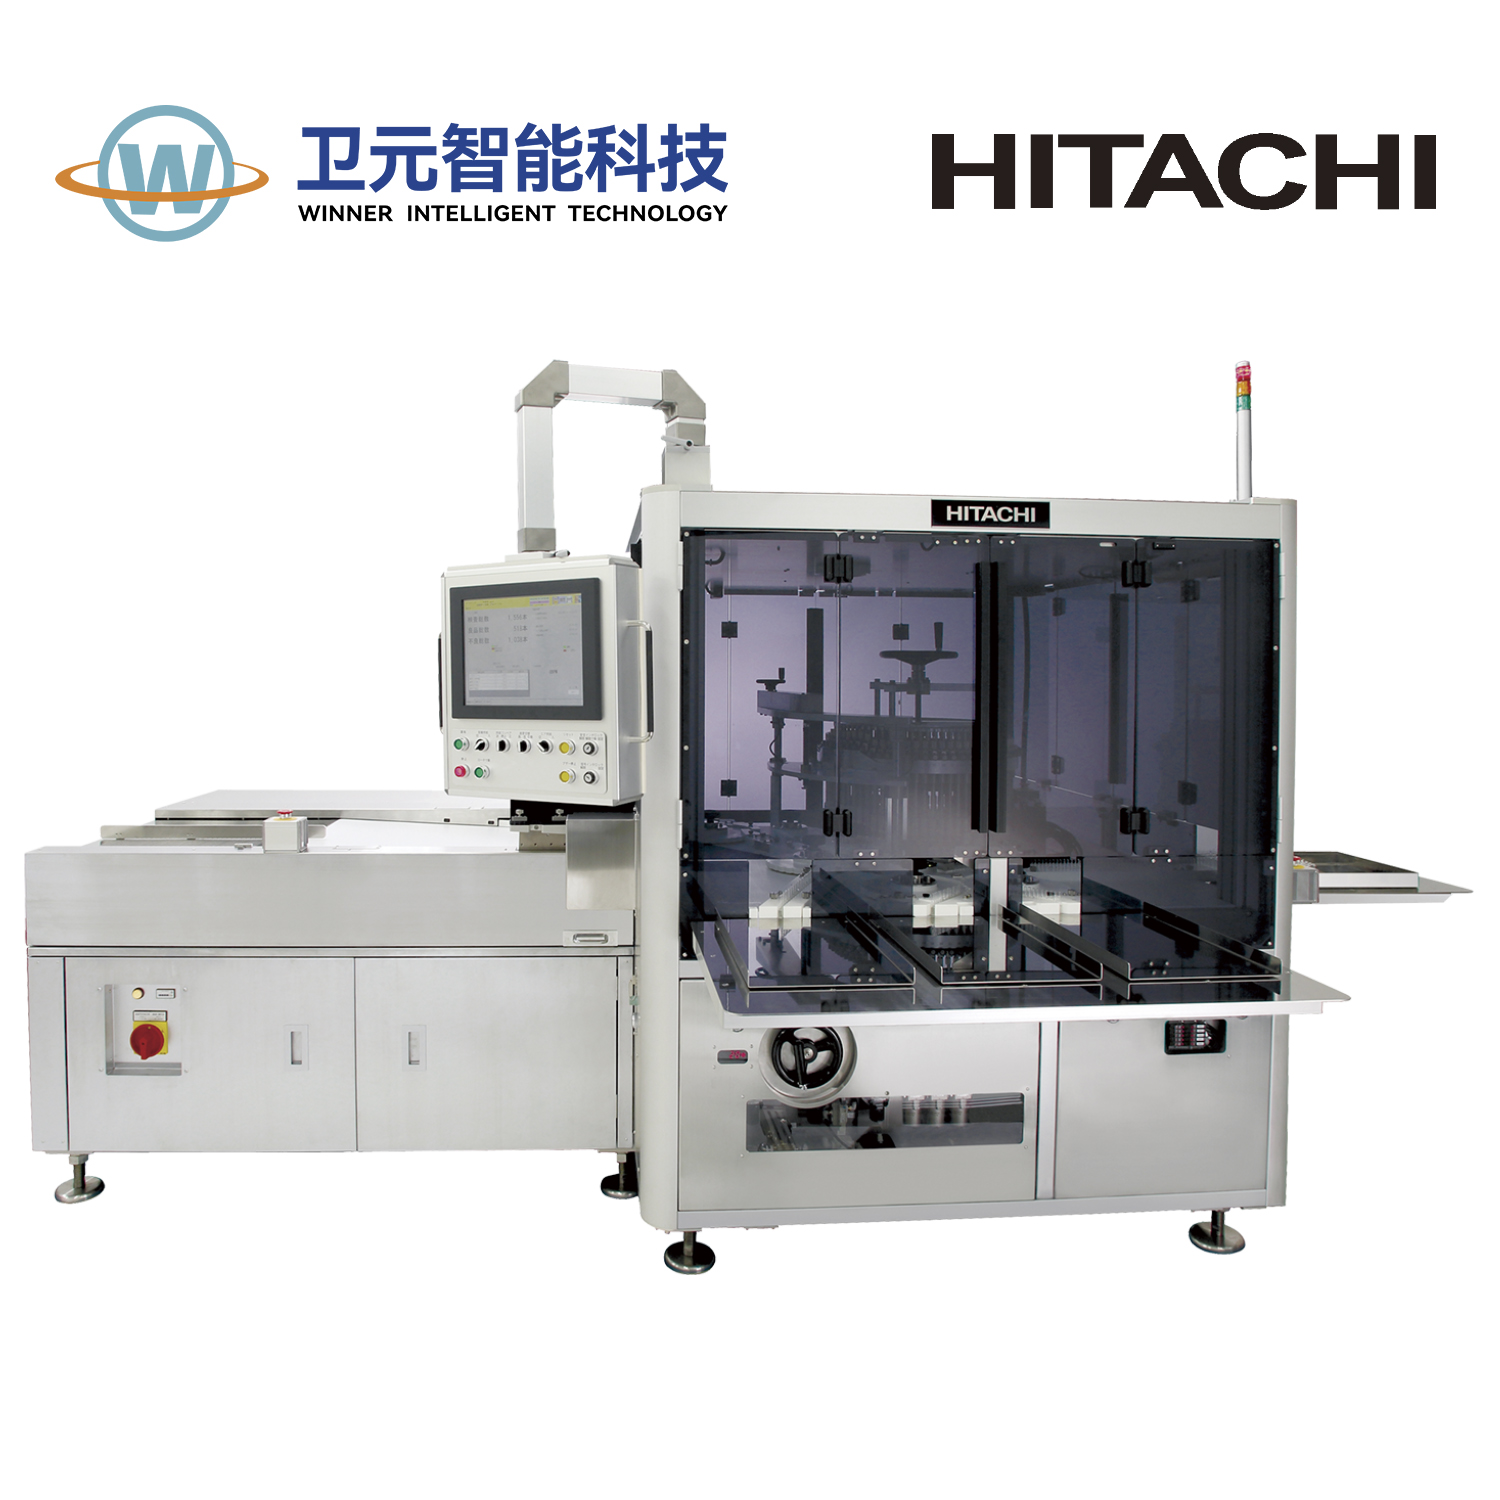 Hitachi High Resolution Inspection System